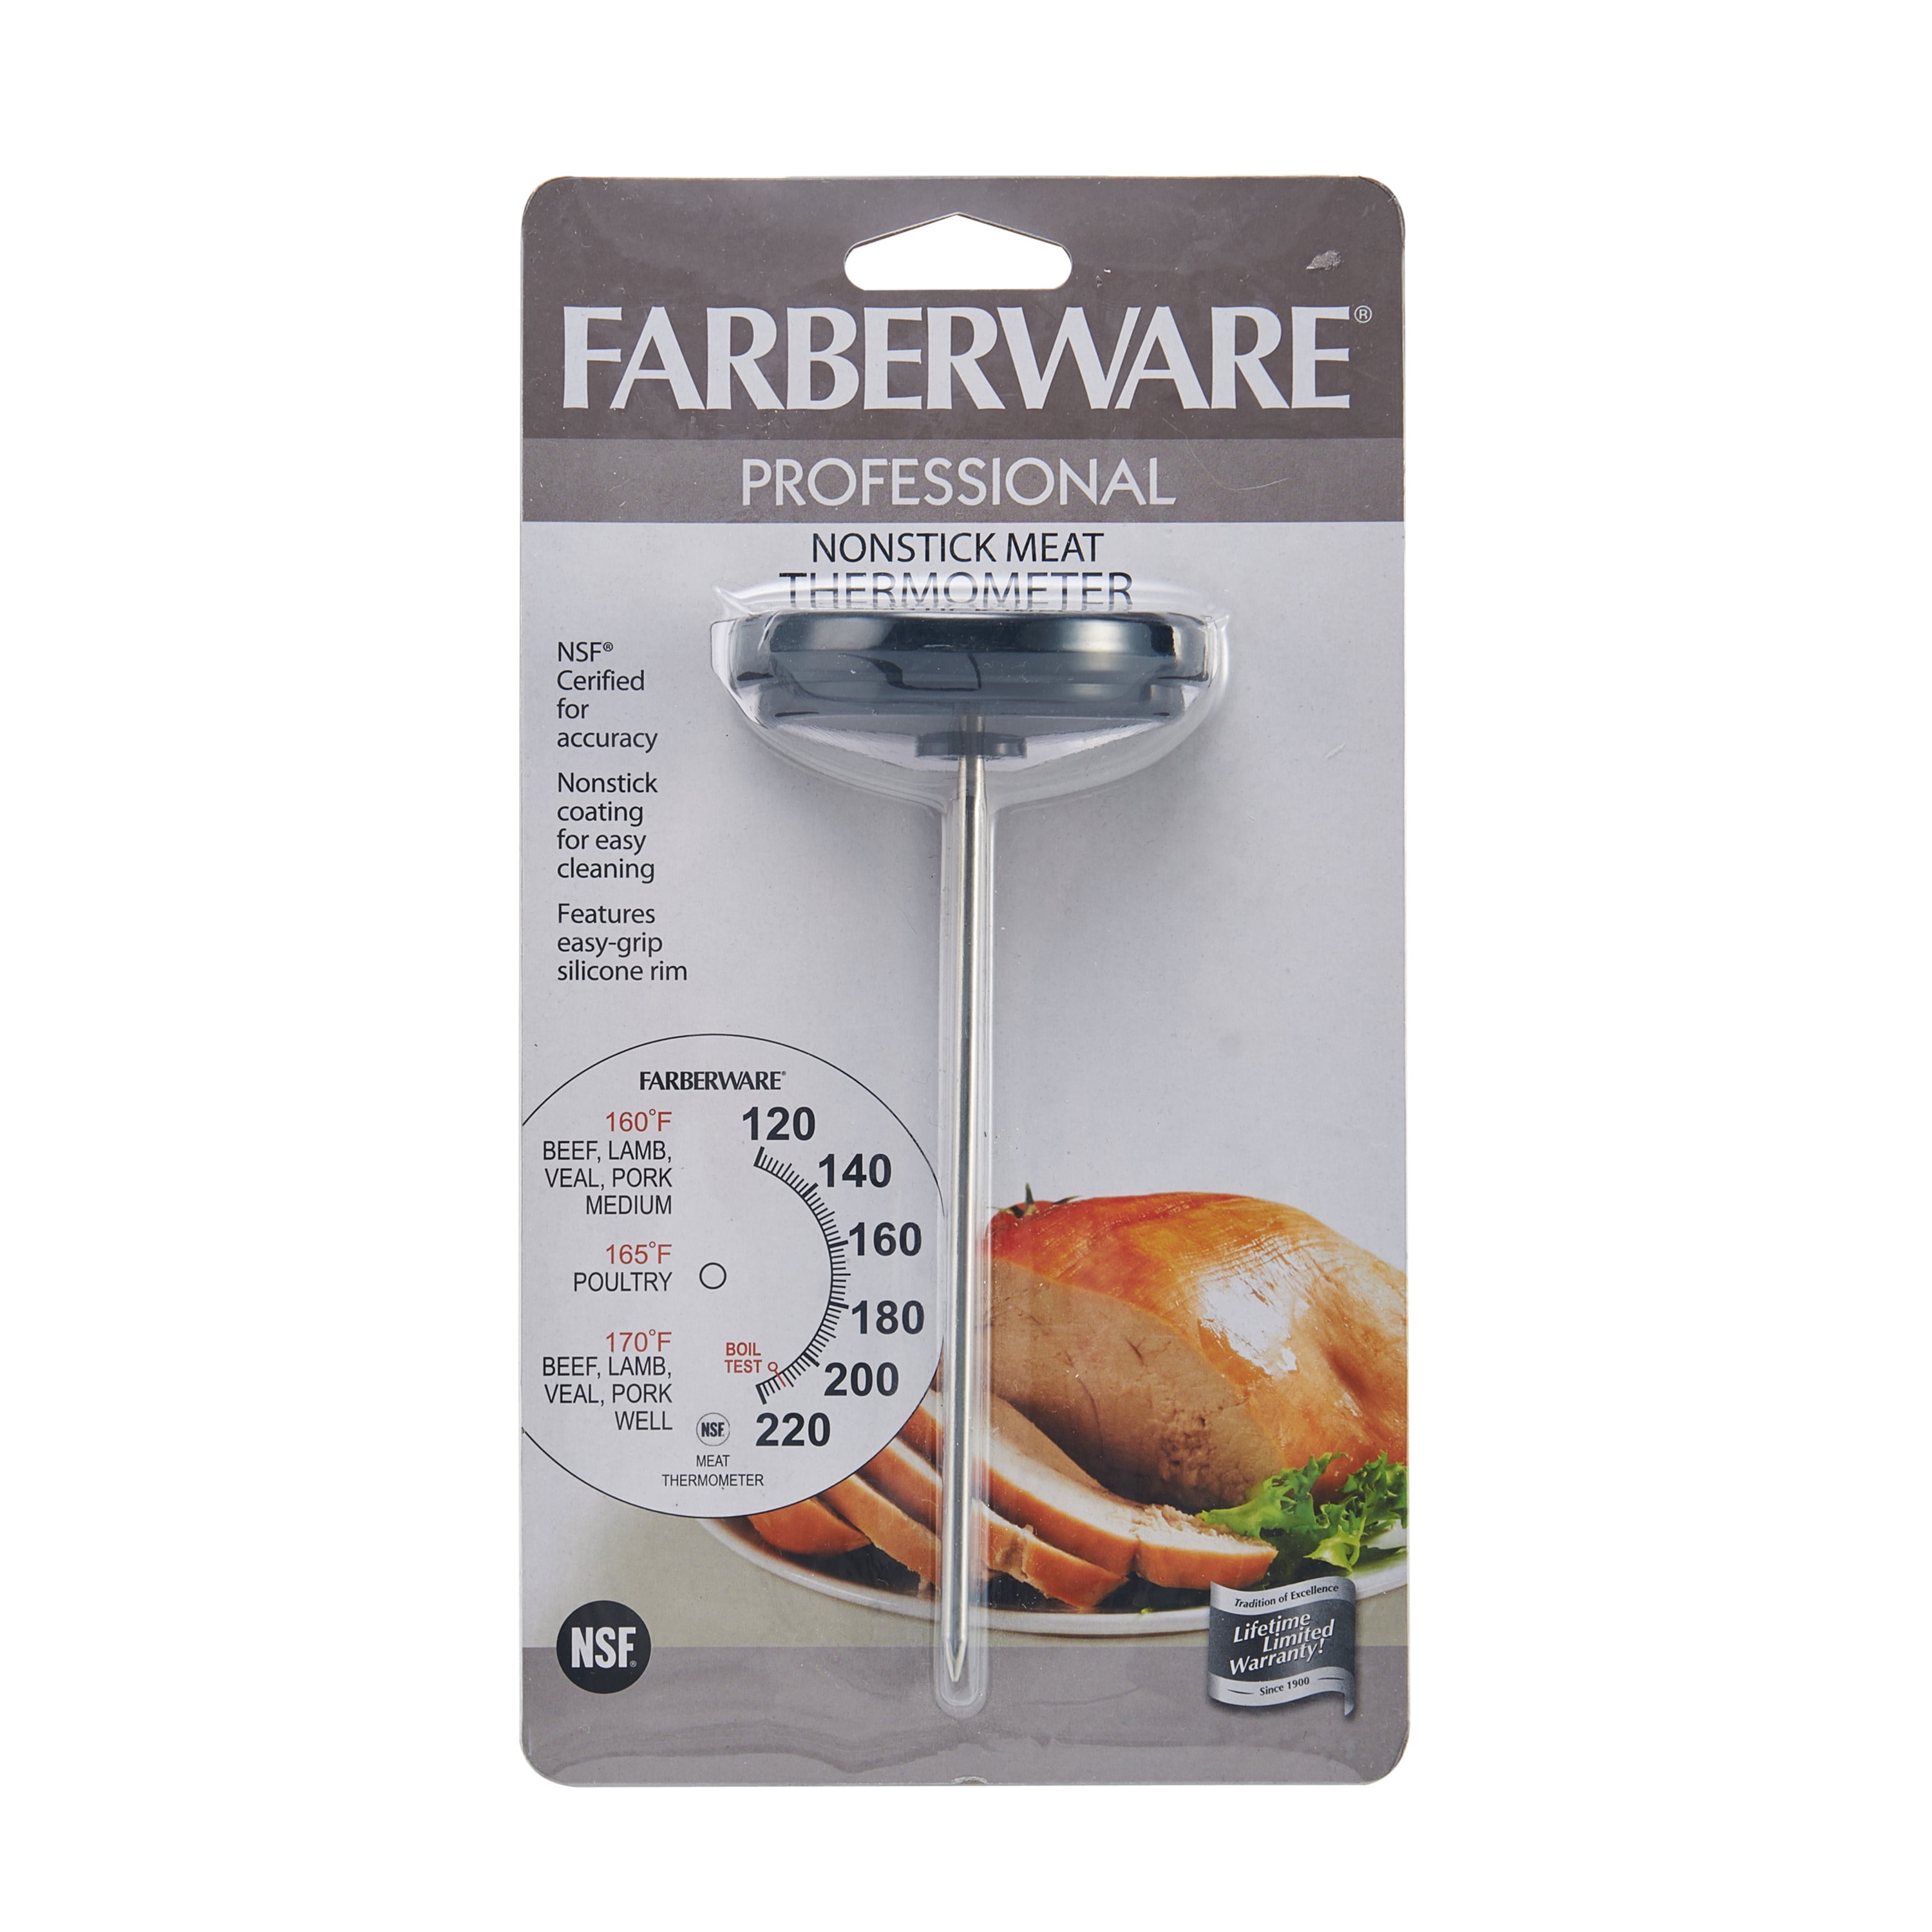 Farberware 5141020 Protek Refrigerator Thermometer, Silver